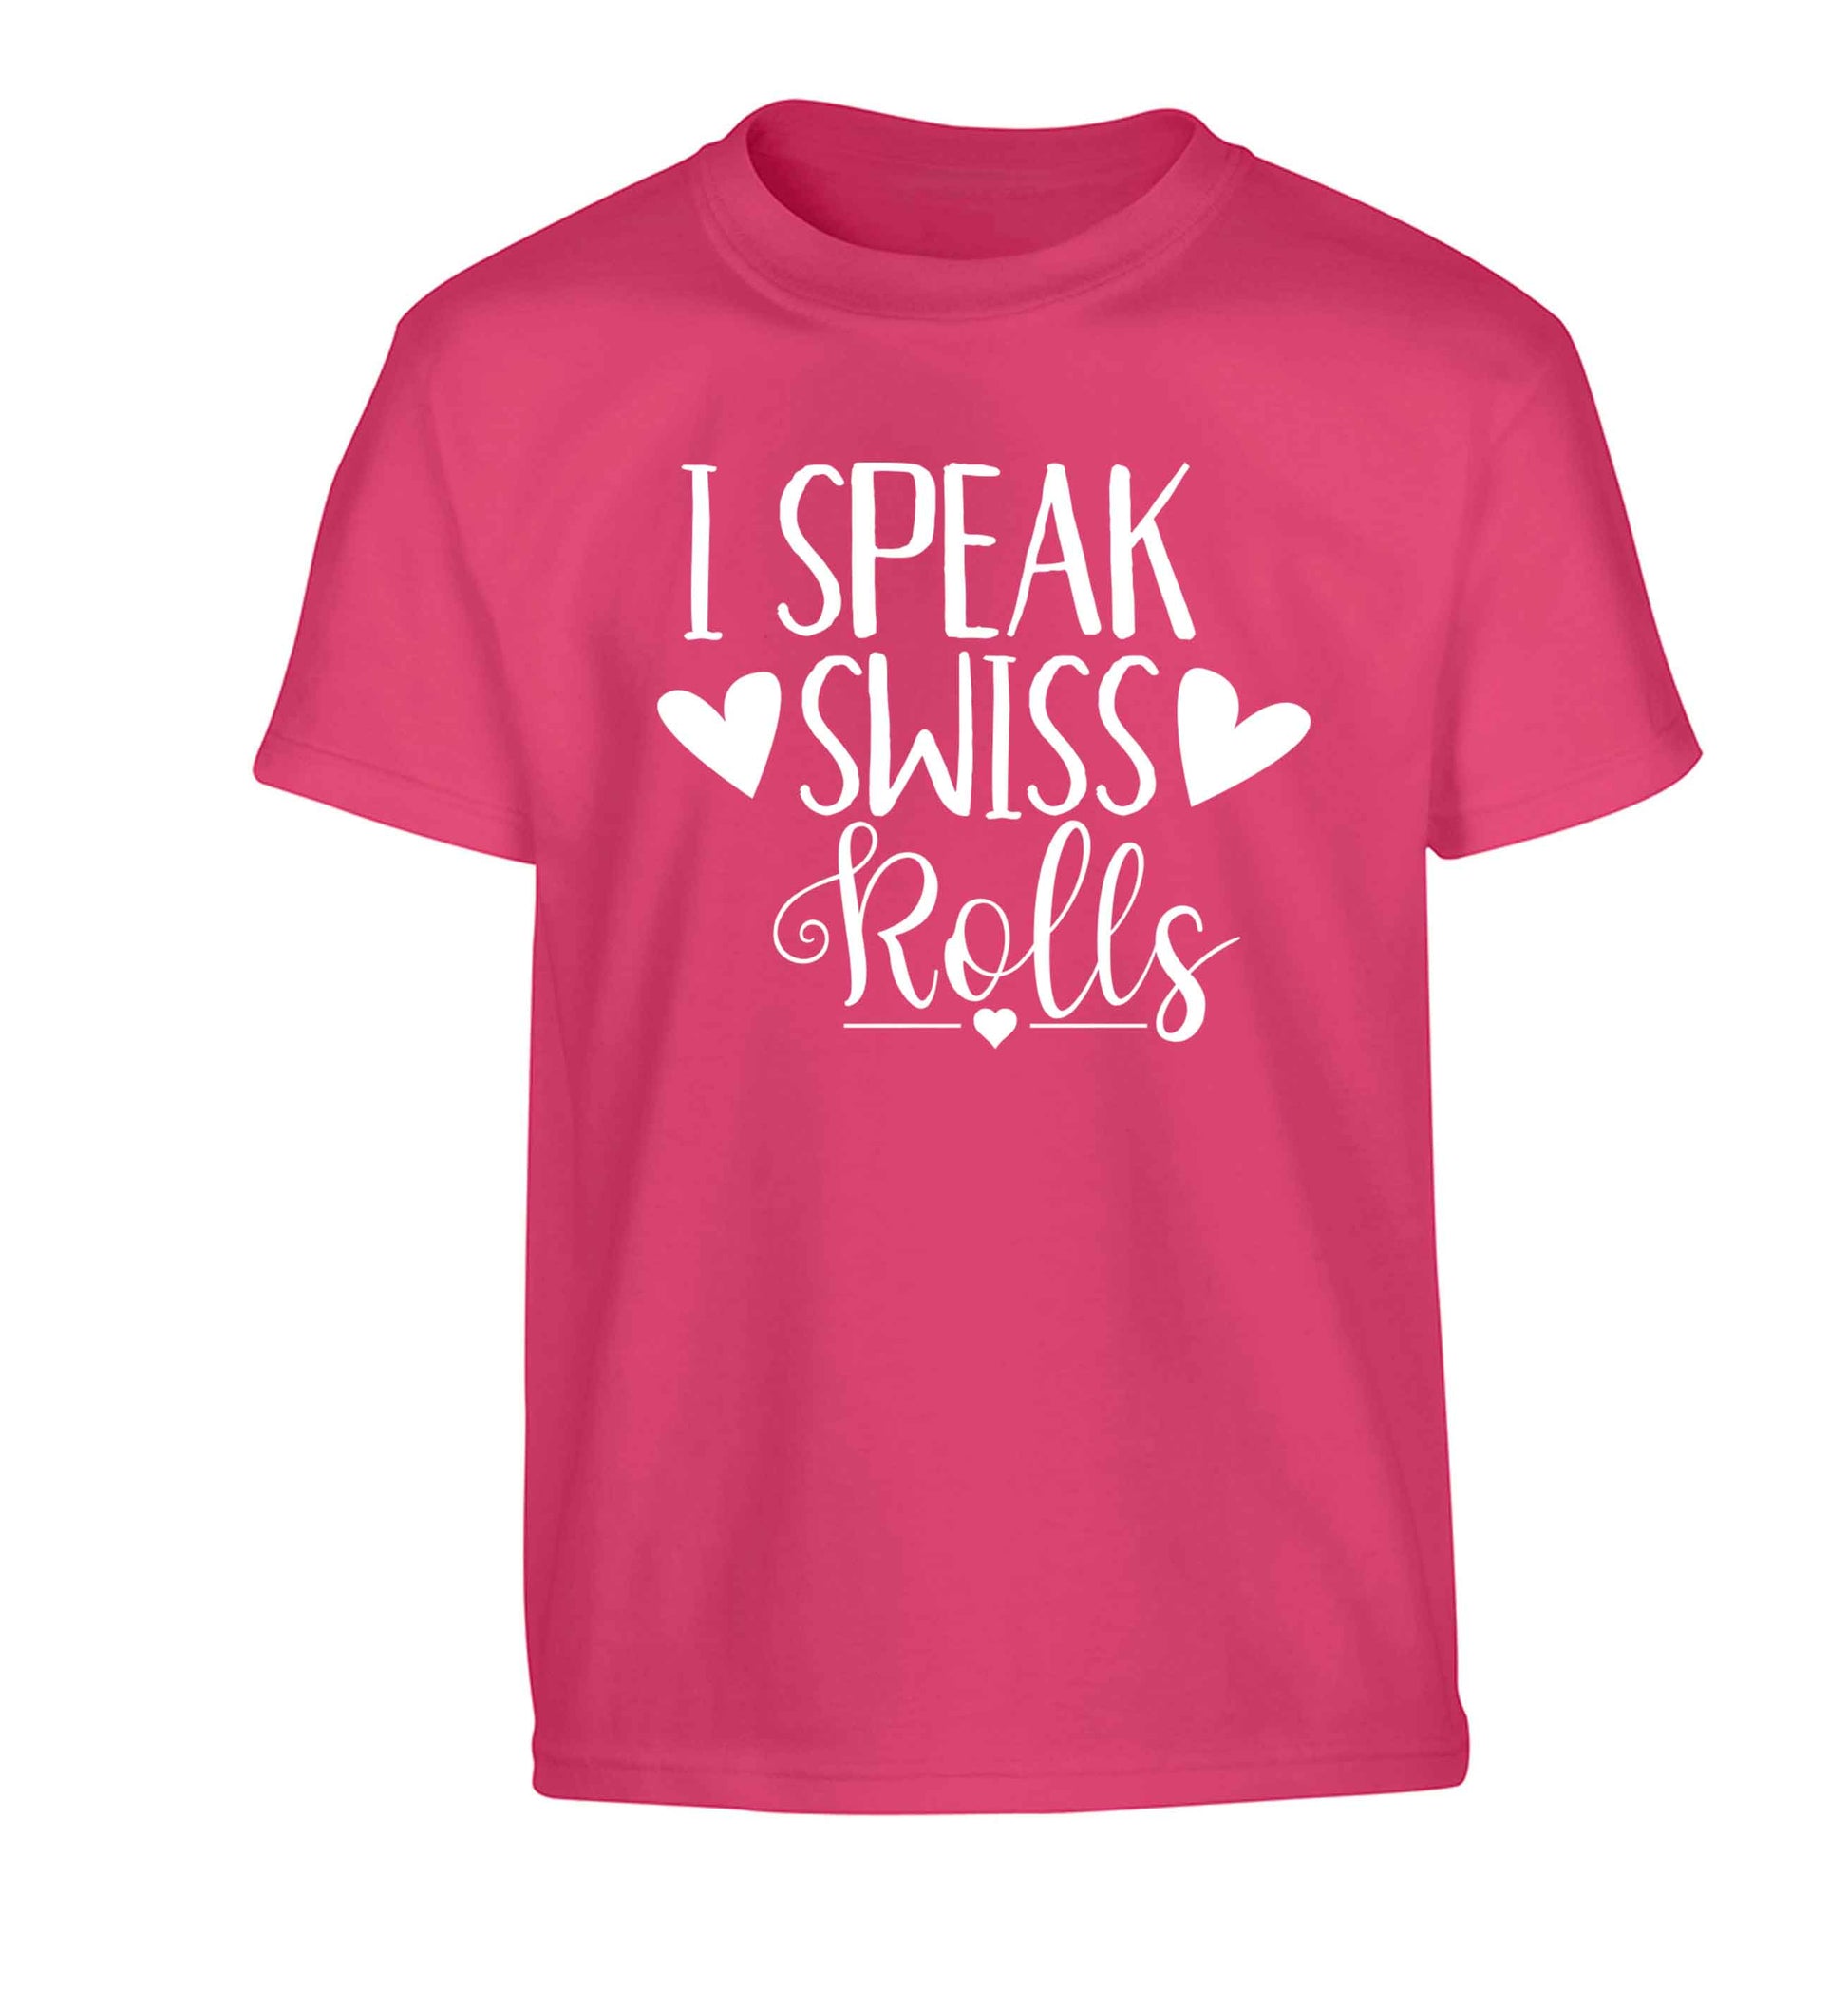 I speak swiss..rolls Children's pink Tshirt 12-13 Years